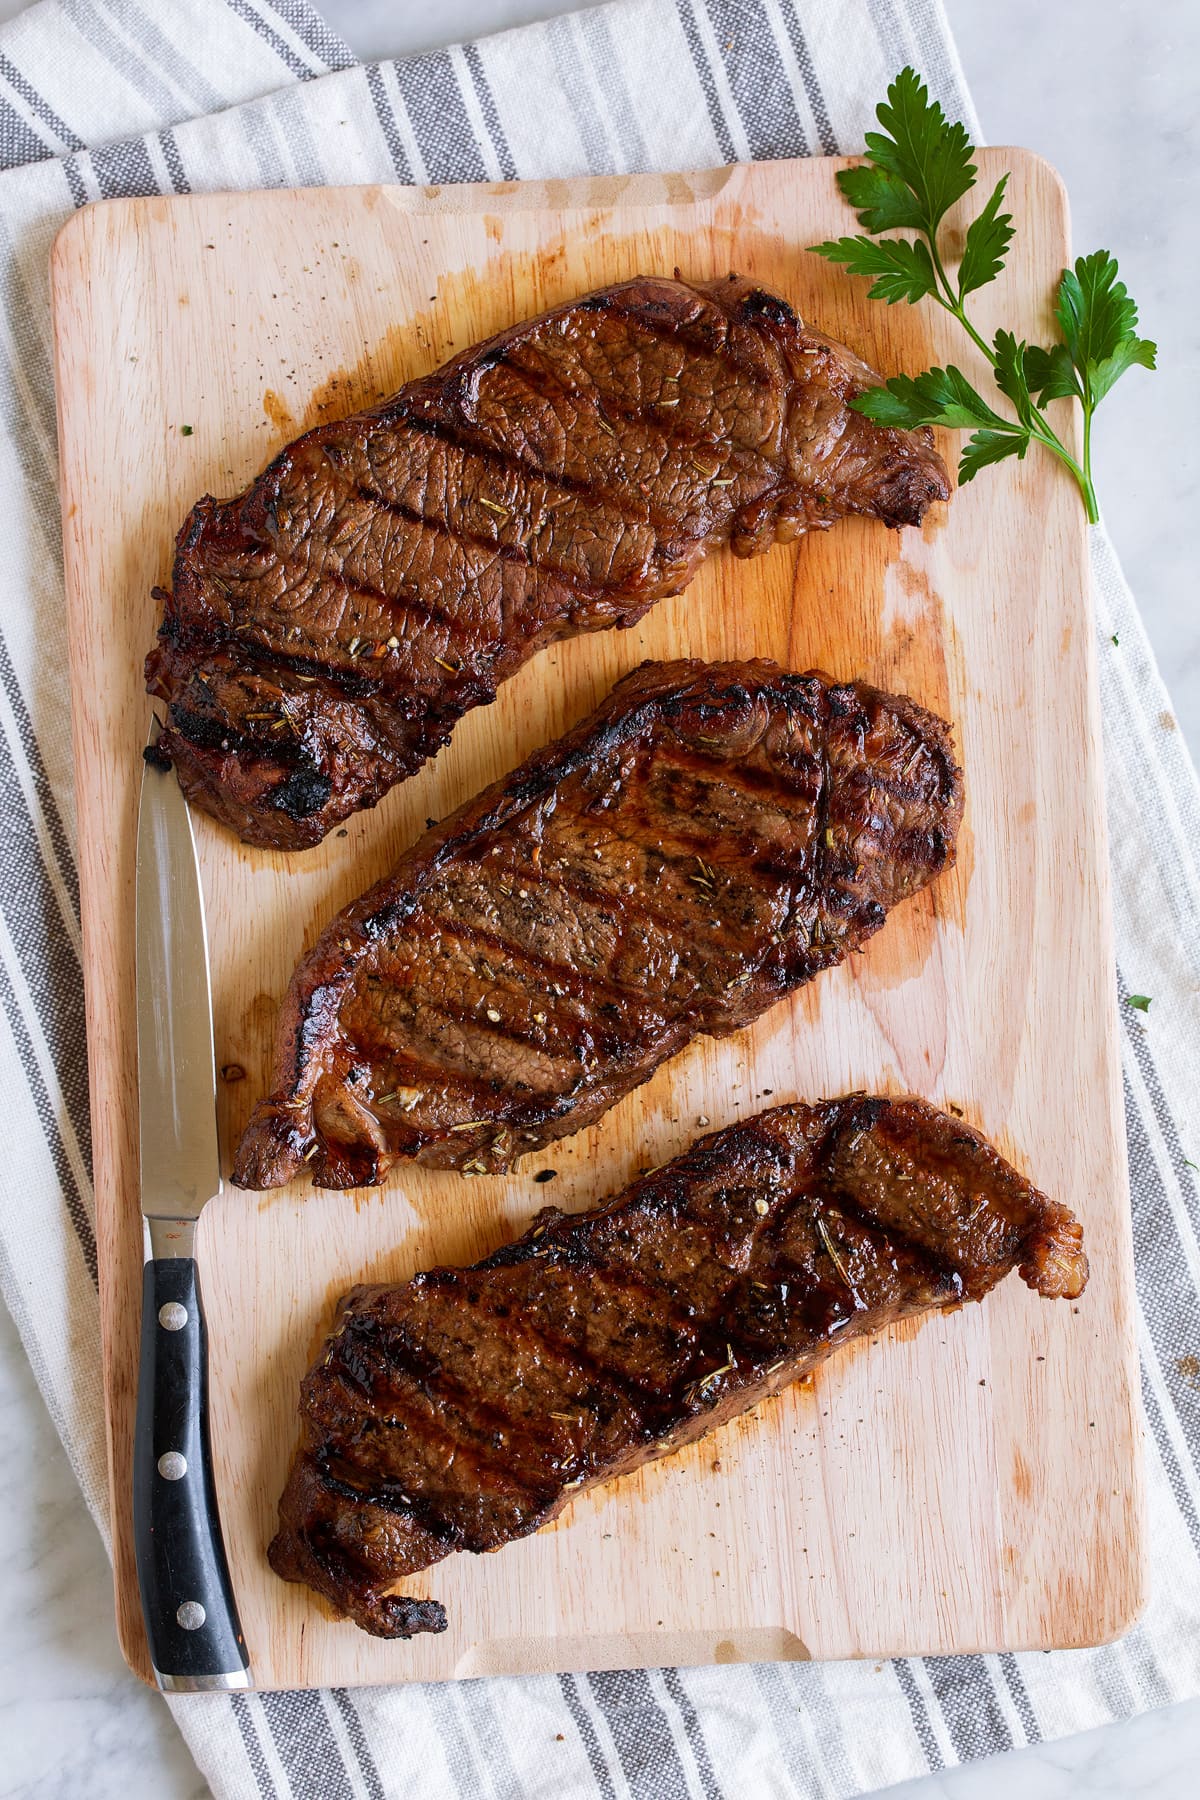 Three steaks on a wooden cutting board.